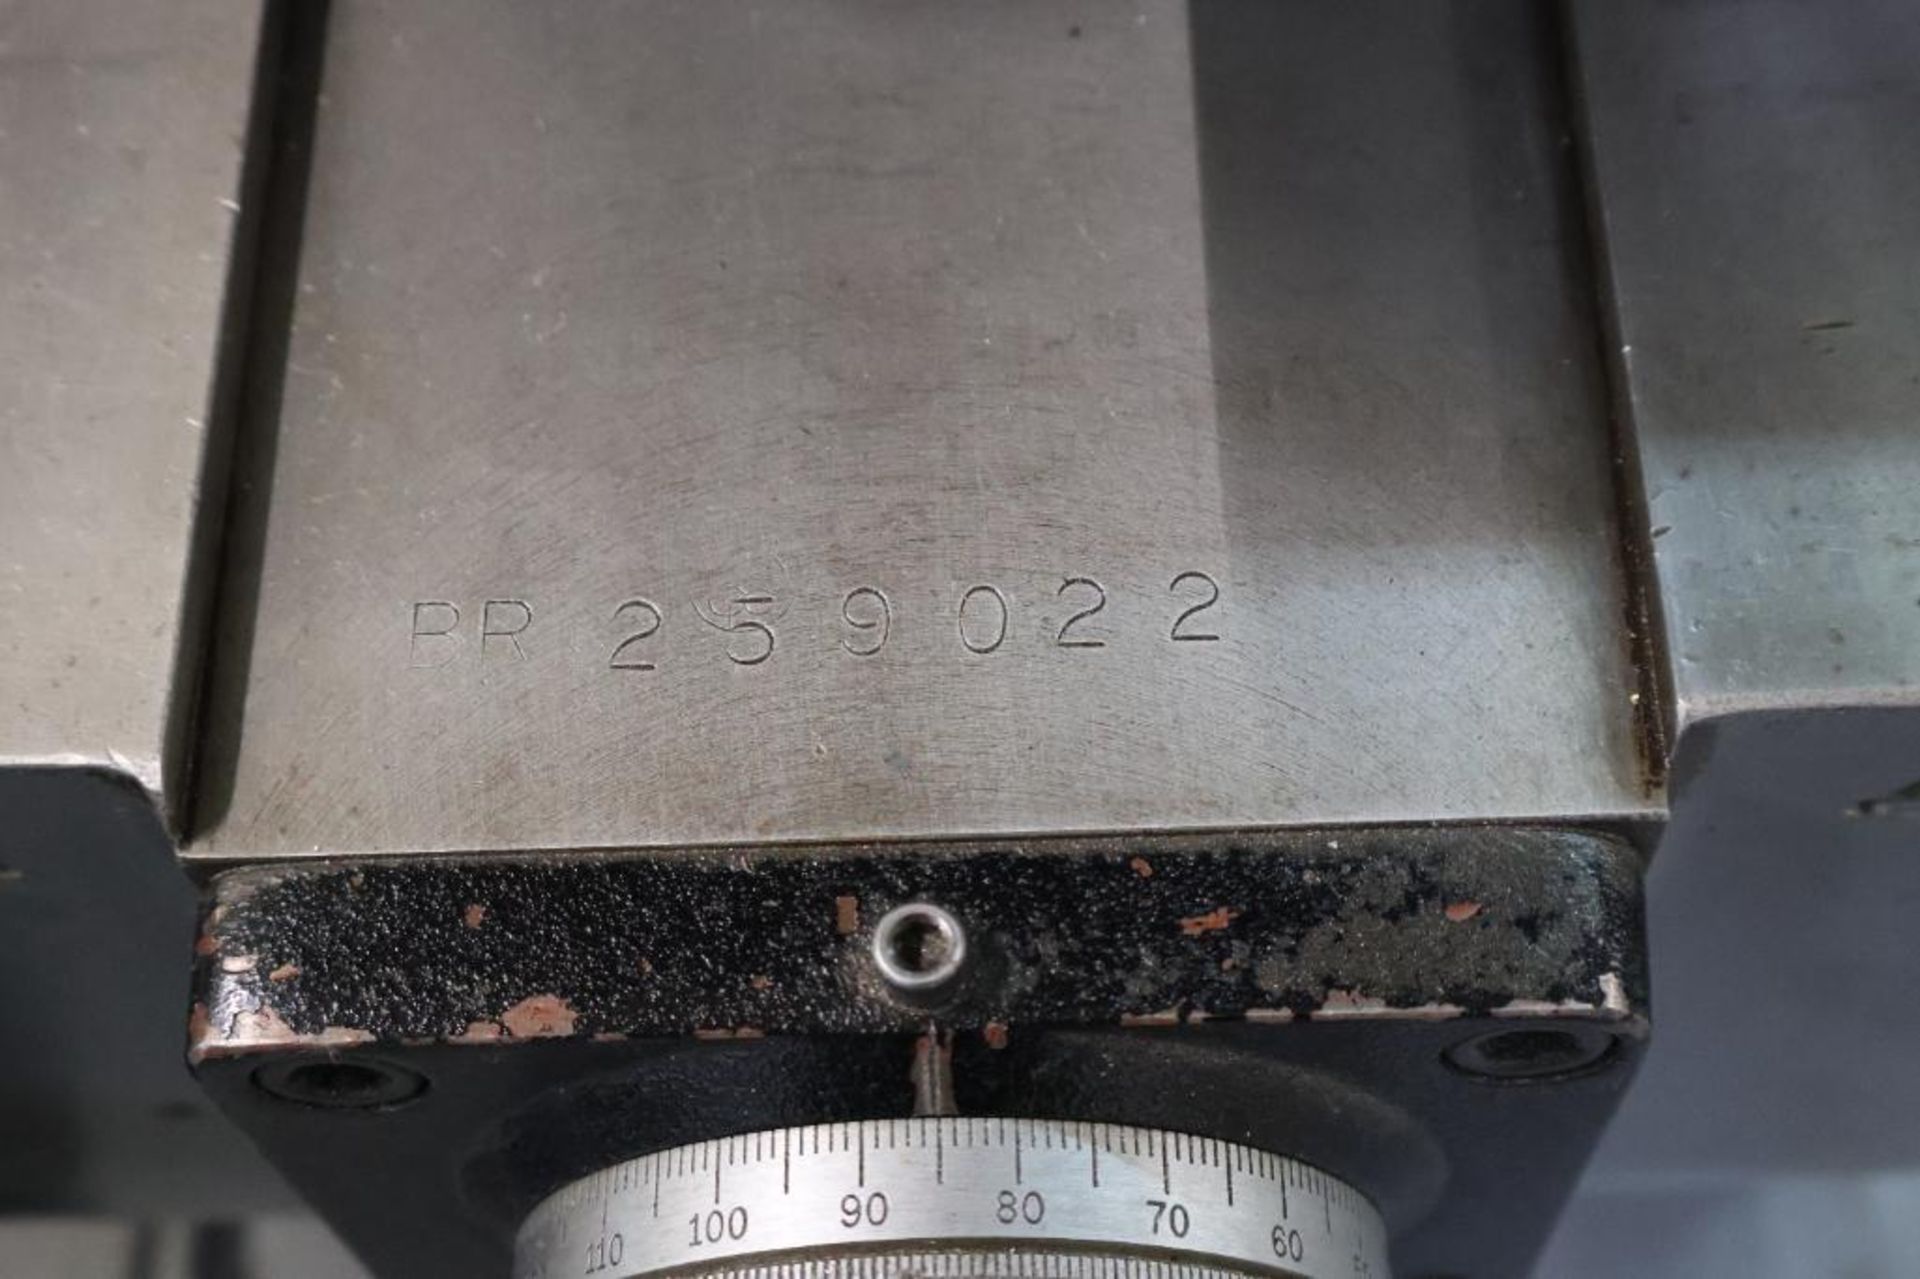 Bridgeport vertical milling machine W/ accessories - Image 14 of 29